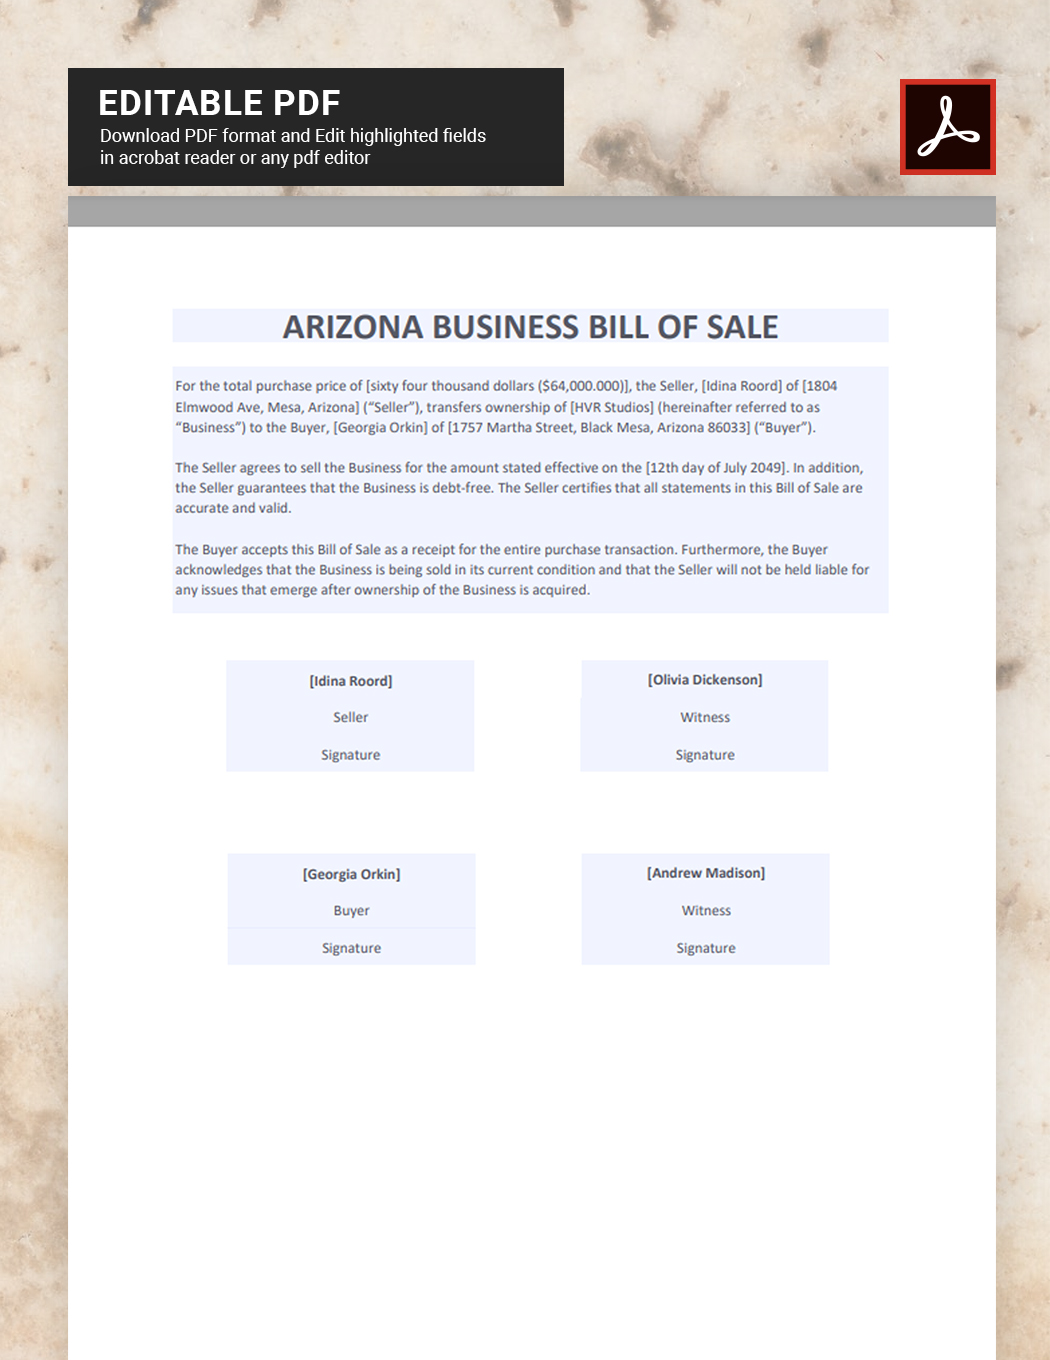 Arizona Business Bill of Sale Template